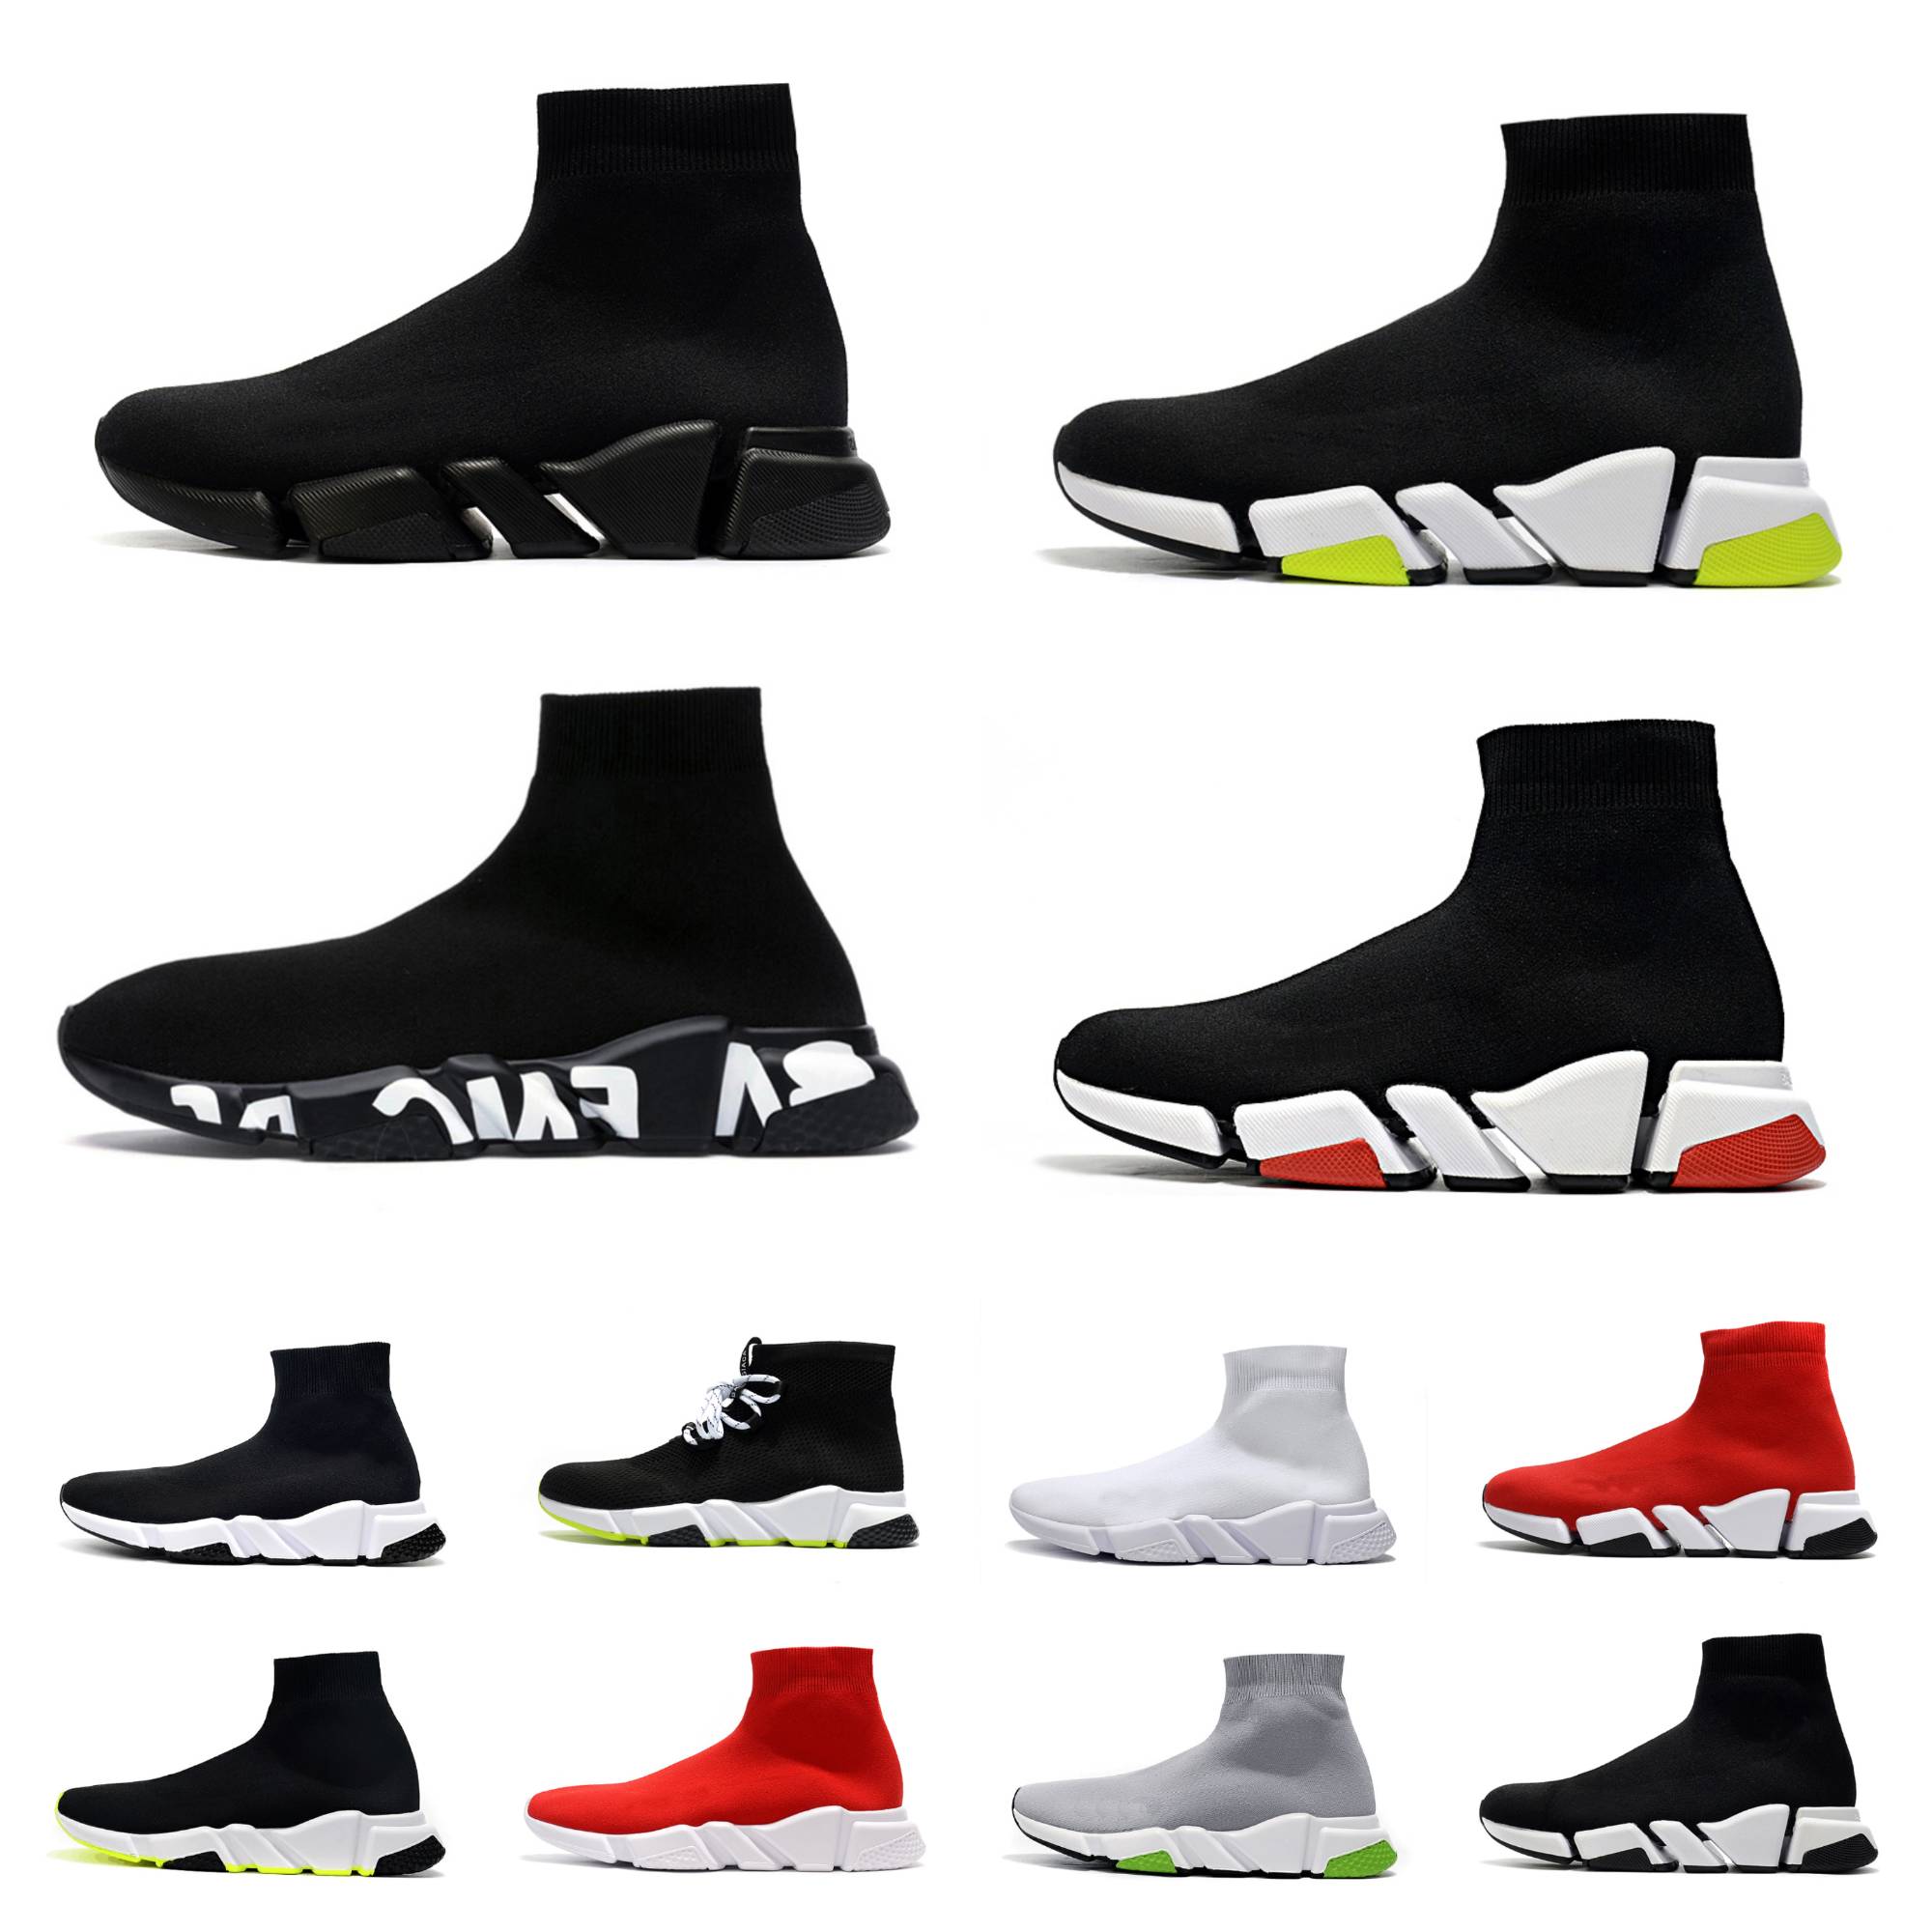 Designer Socks Casual Shoes Platform Men Women Speed Recycled Black Classic 2.0 1.0 Trainer Runner Sneaker Sock Shoe Speeds Graffiti Trainers Black White Red Sneakers